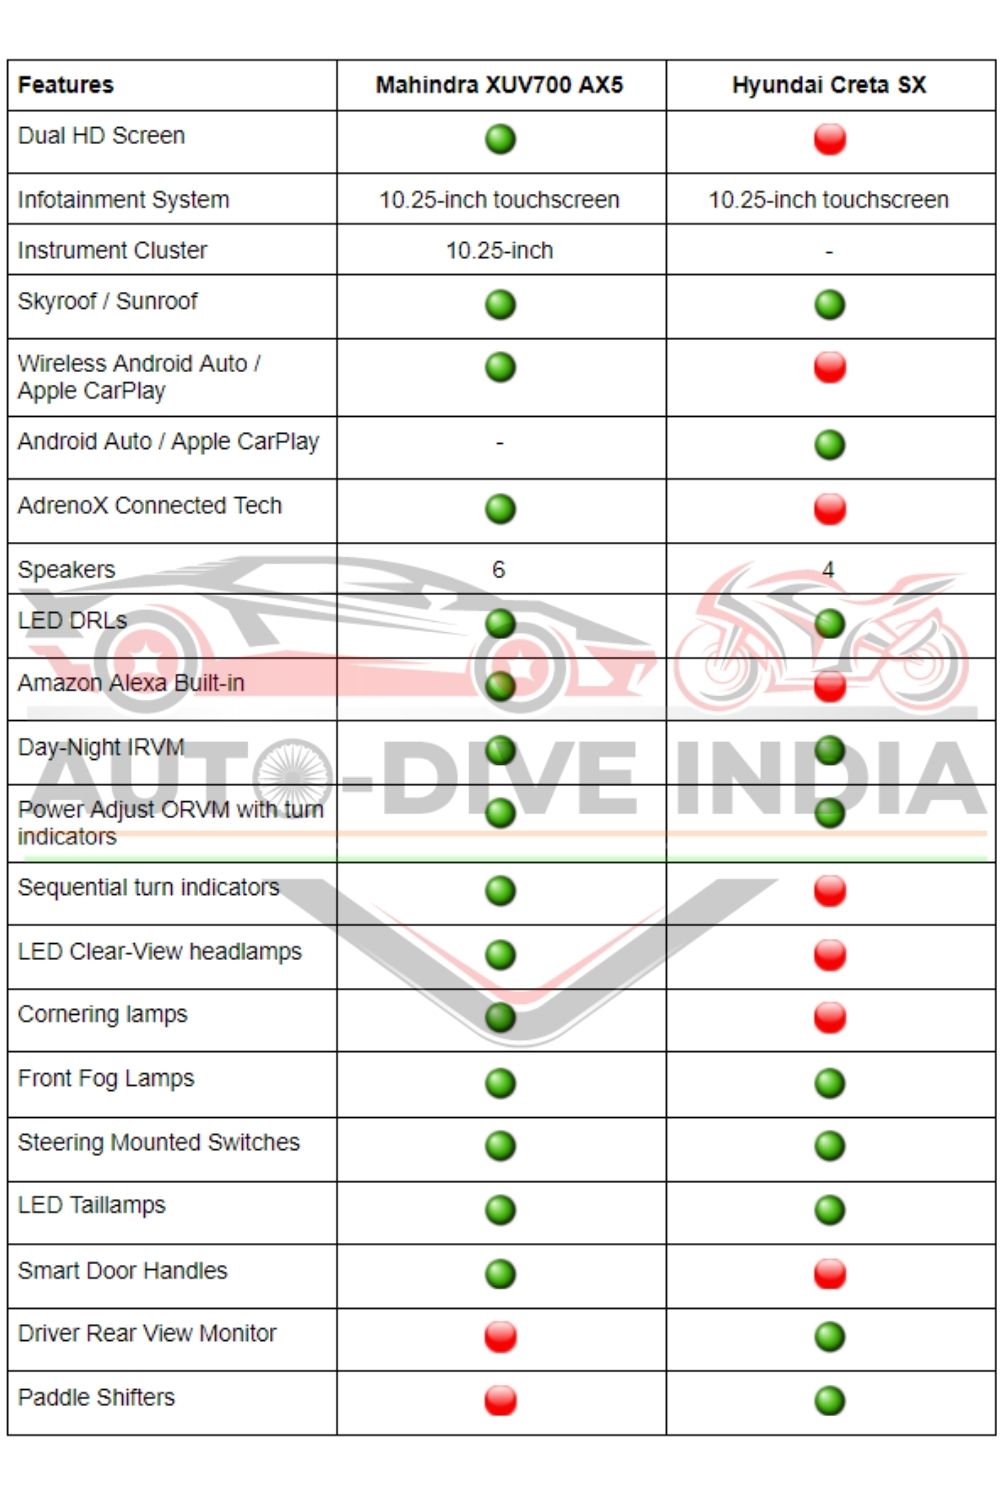 Features Comparison: Mahindra XUV700 AX5 vs Hyundai Creta SX